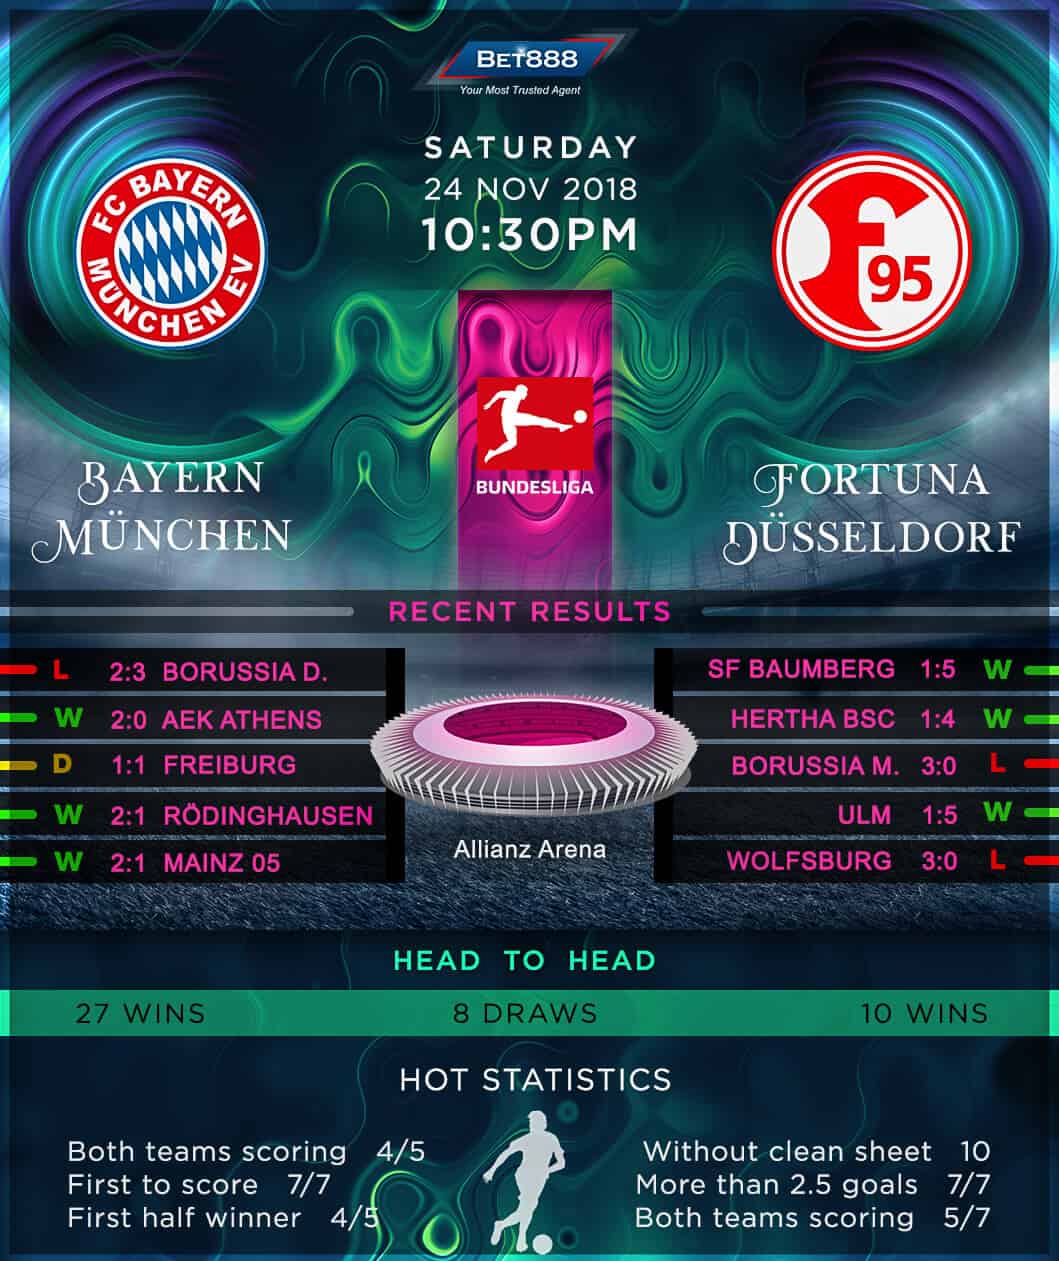 Bayern Munich vs Fortuna Dusseldorf 24/11/18